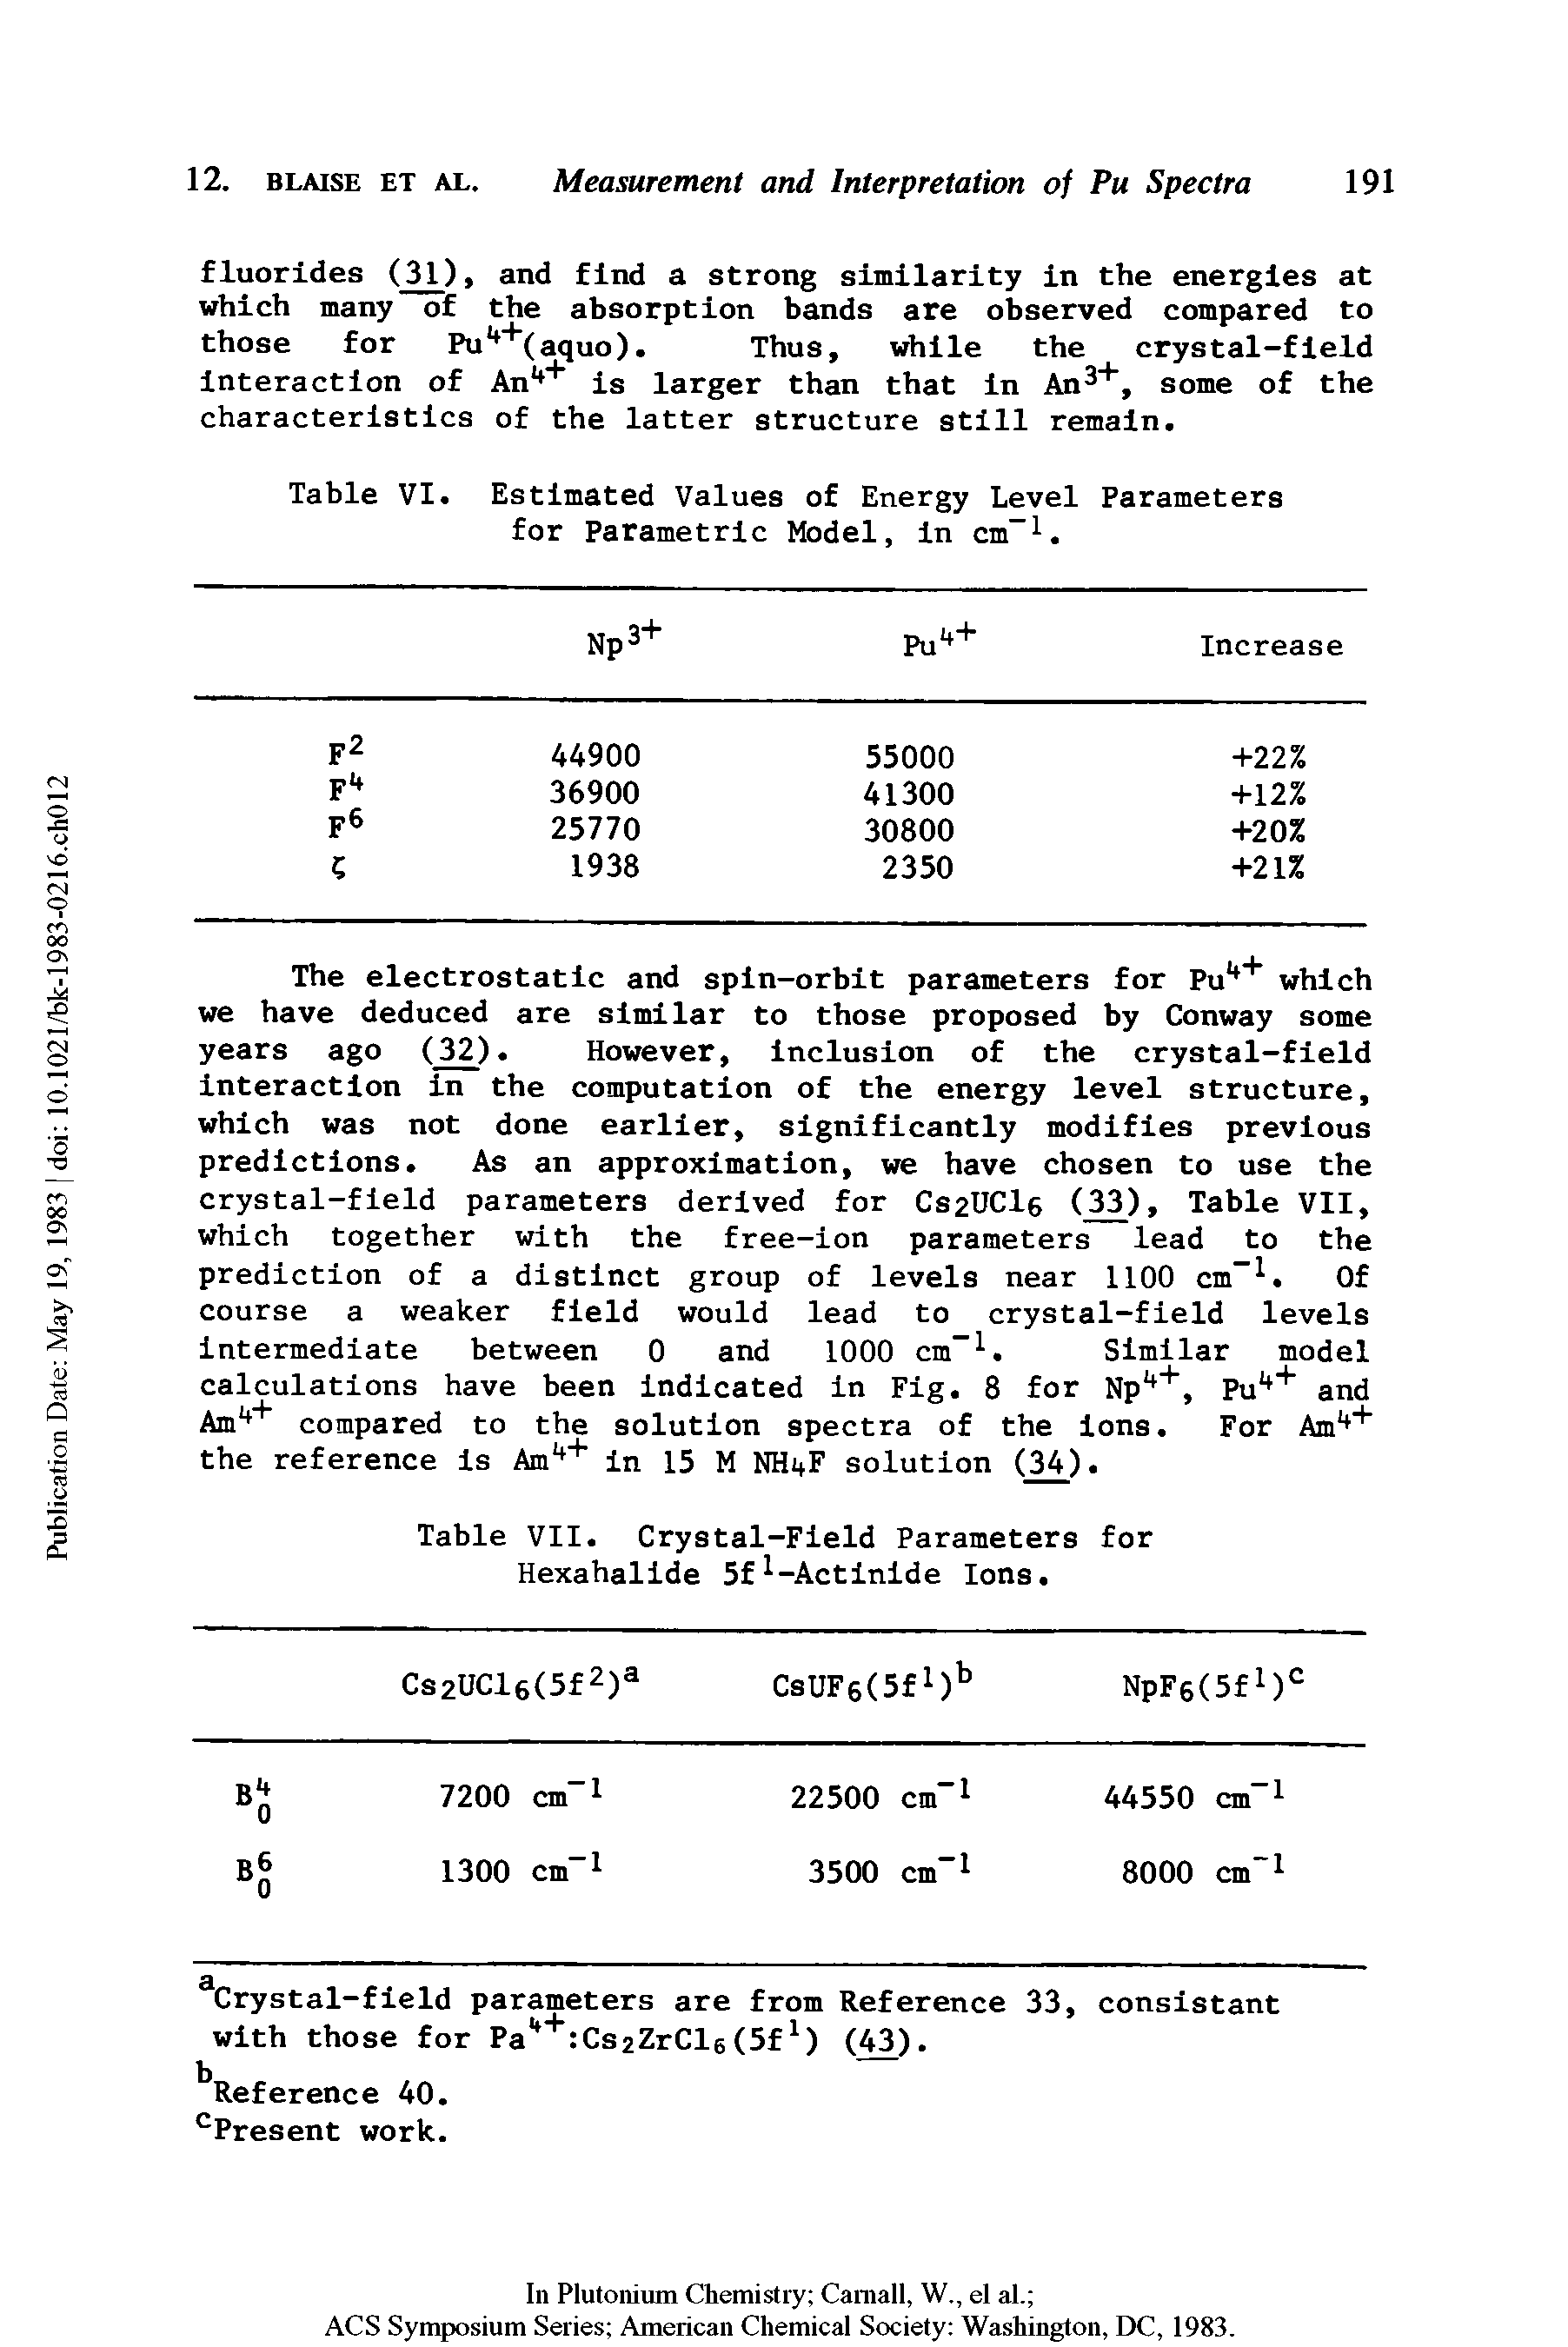 Table VII. Crystal-Field Parameters for Hexahalide 5f -Actinide Ions.